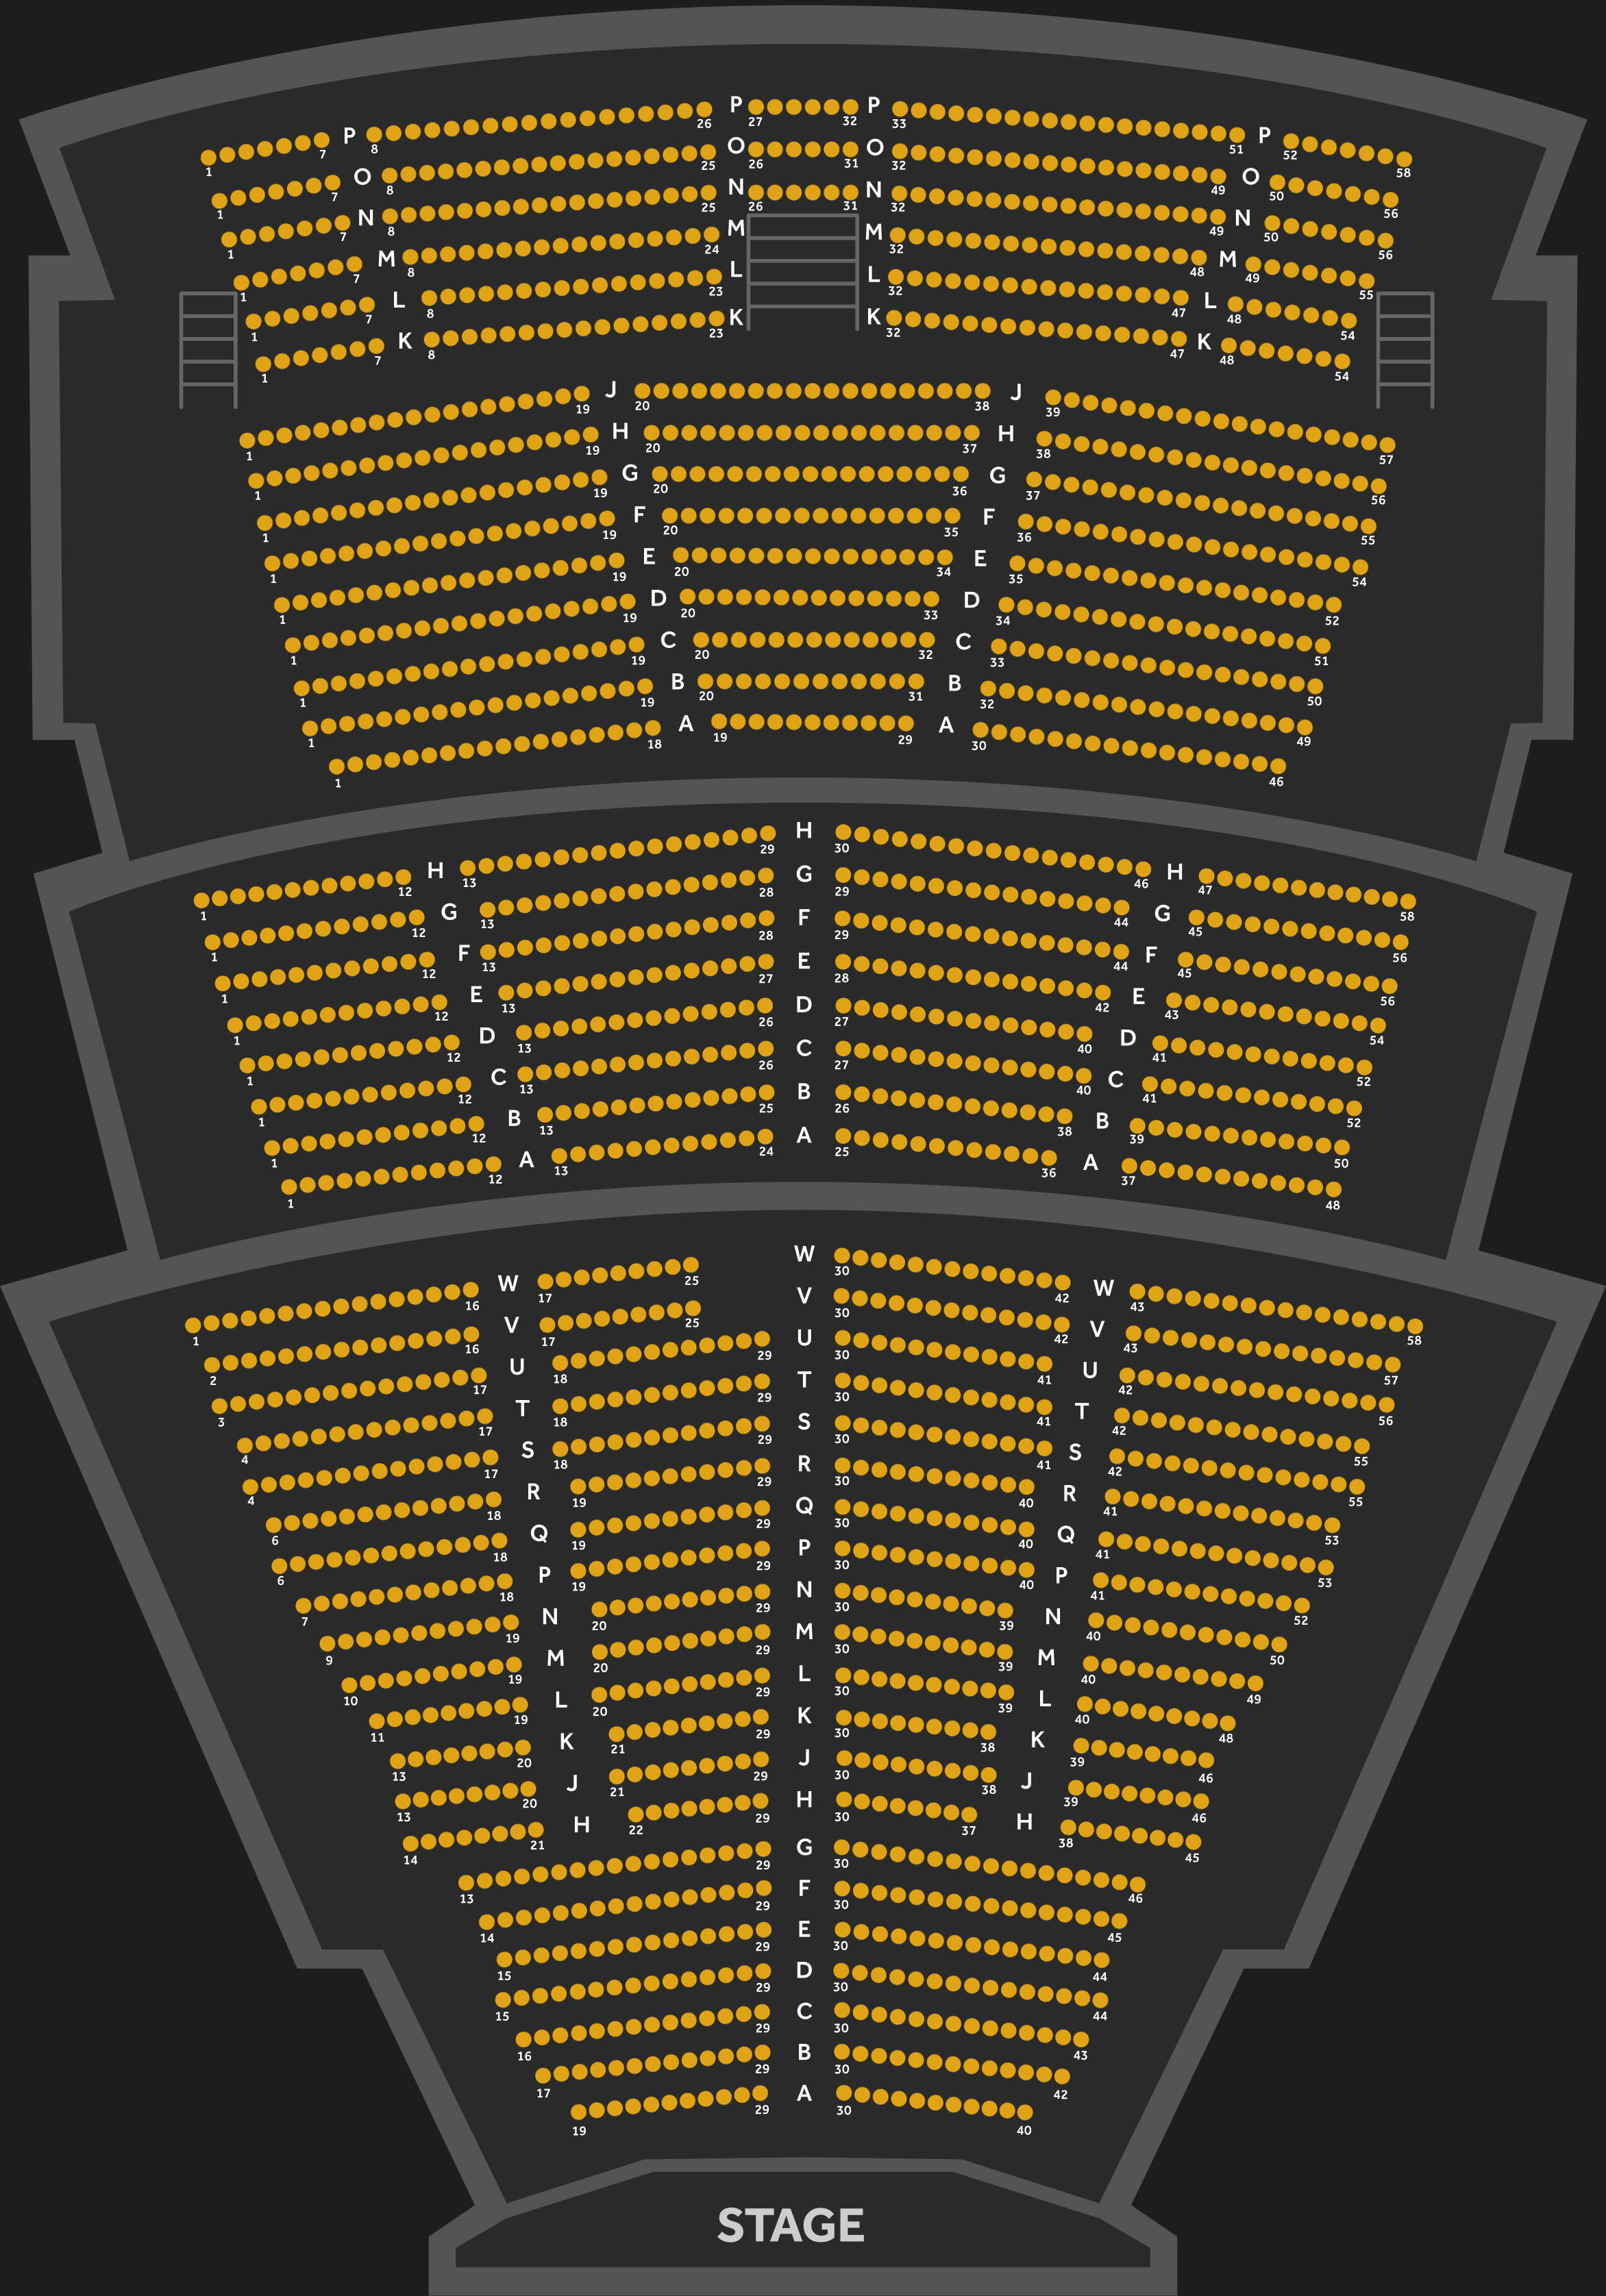 seats-full-large.jpg